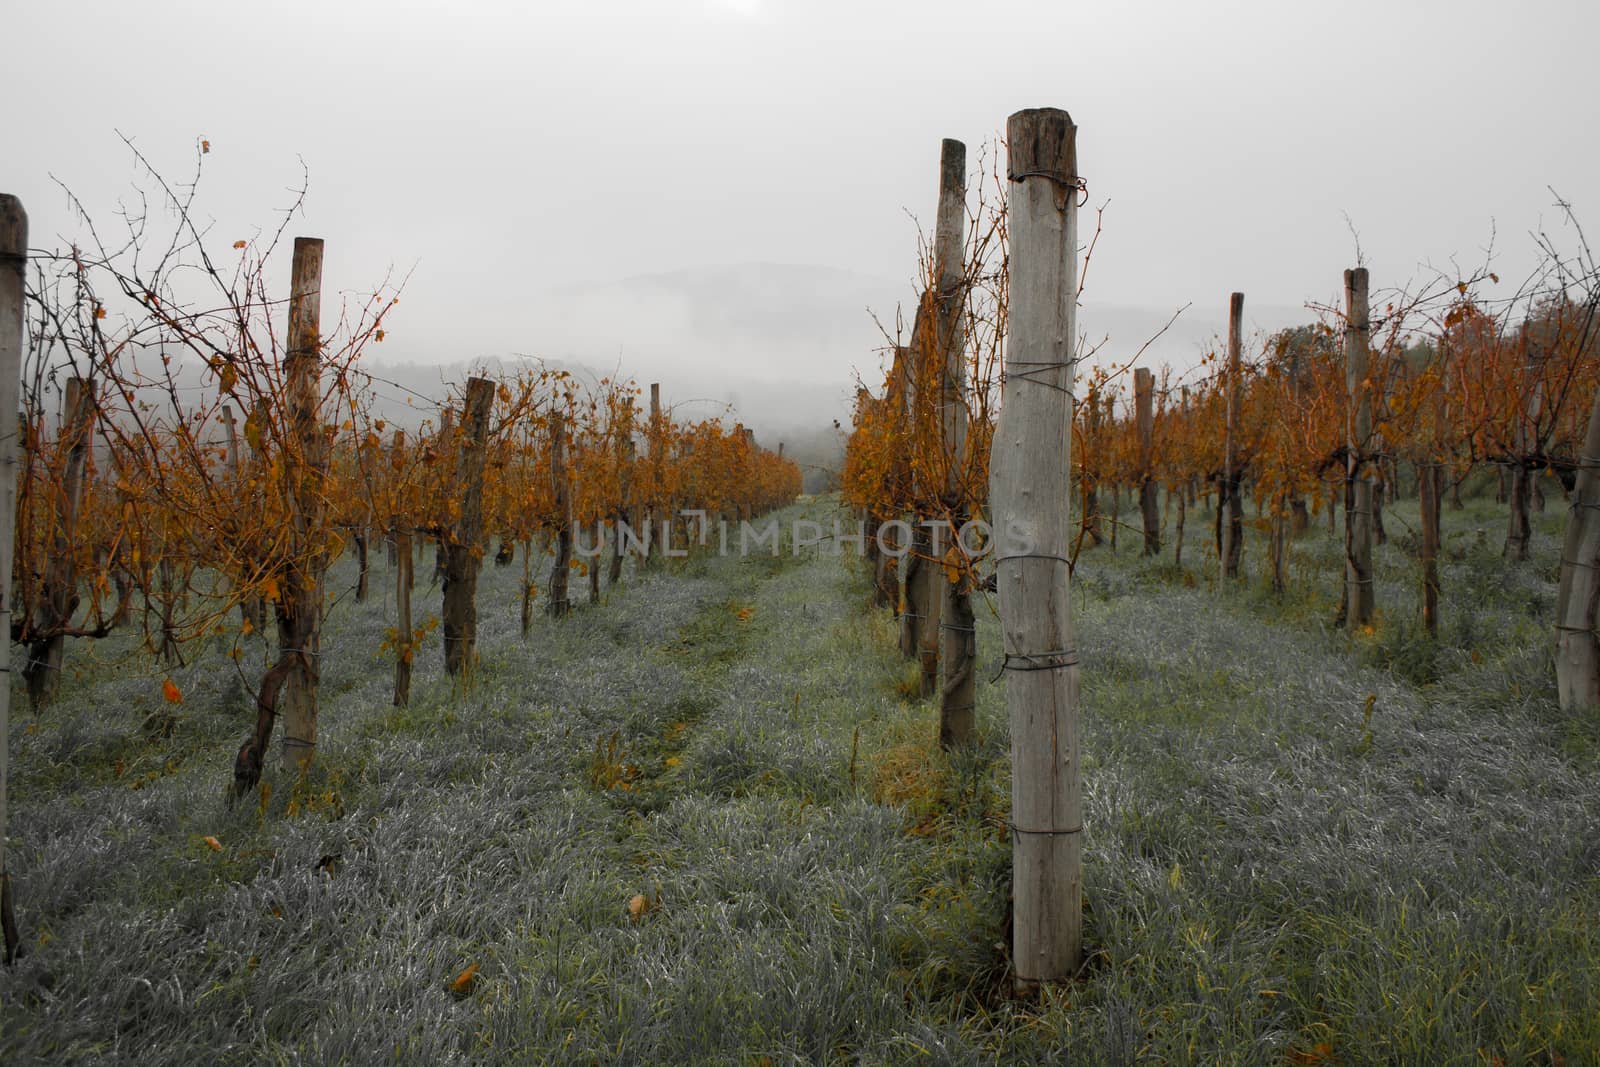 Autumn vineyard in Slovenia by rainfallsup